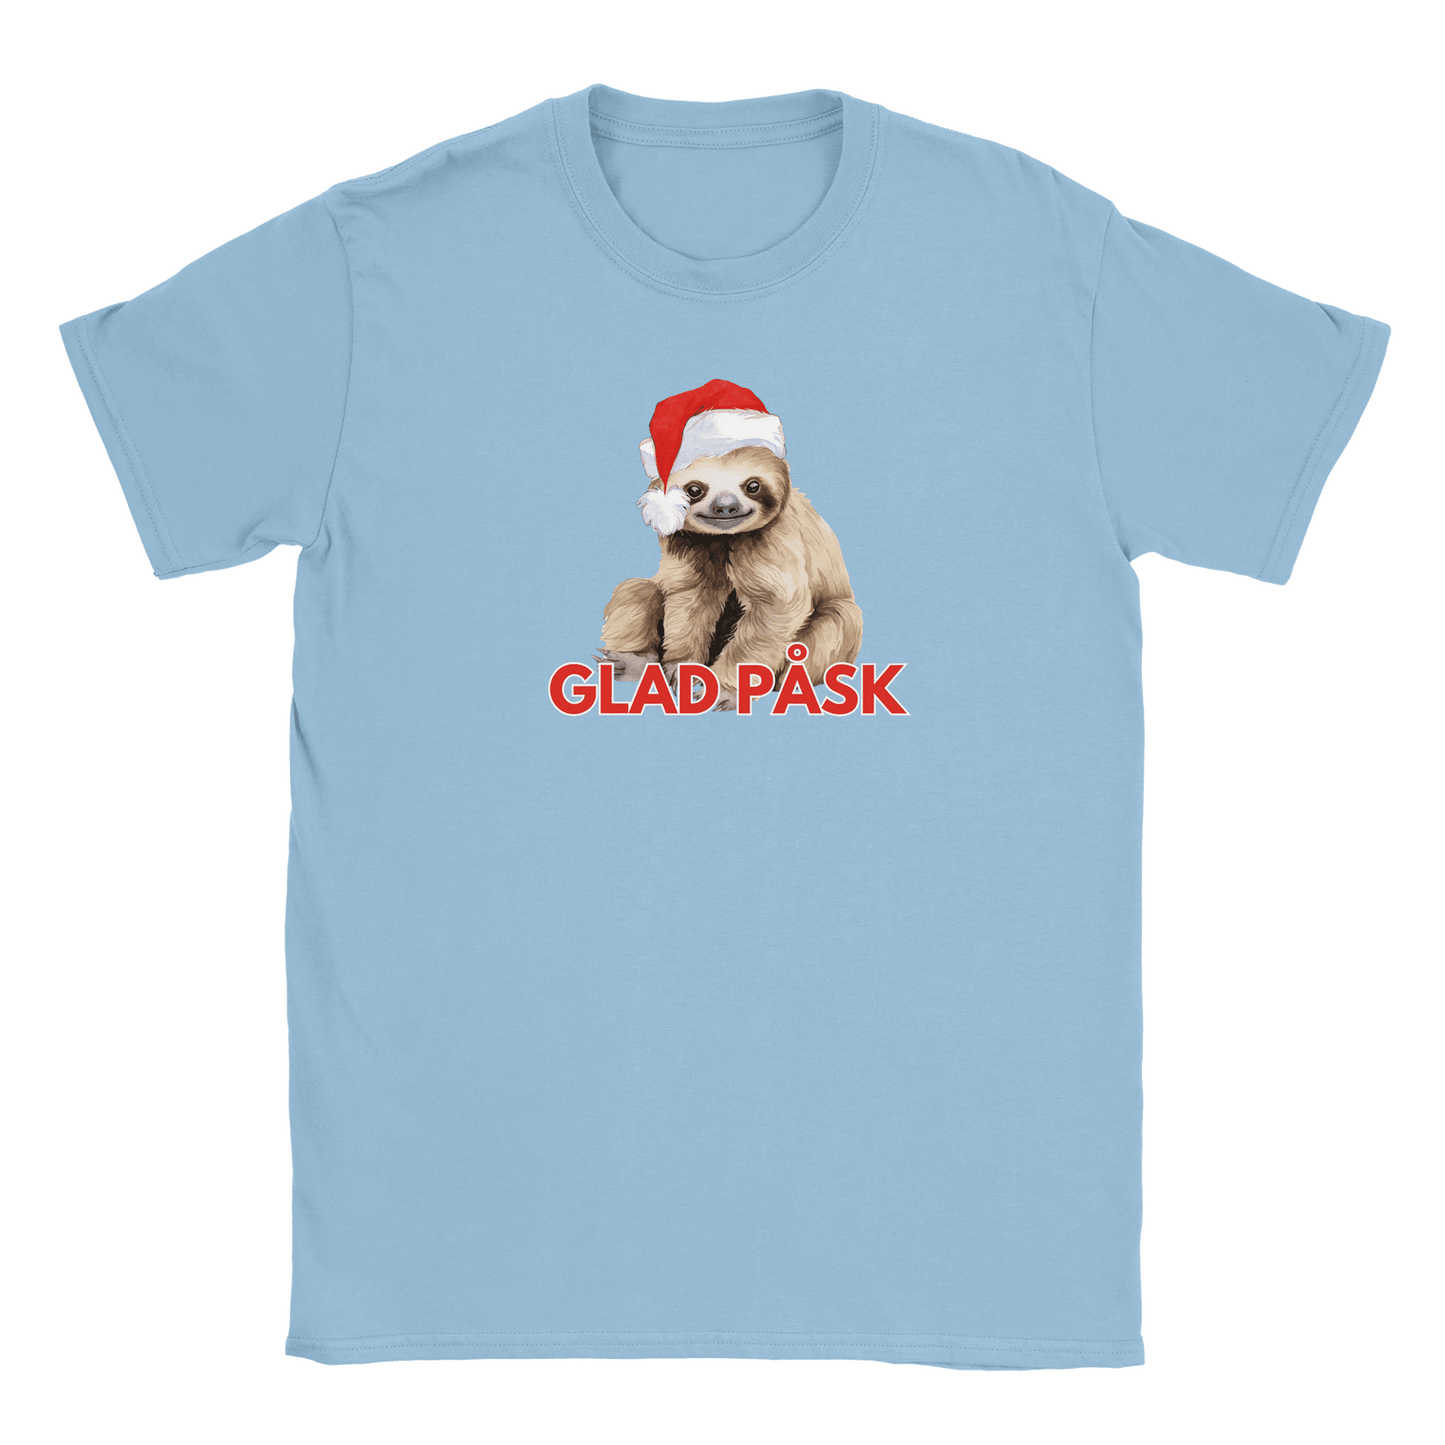 Sengångarens God Jul - T-shirt Ljusblå